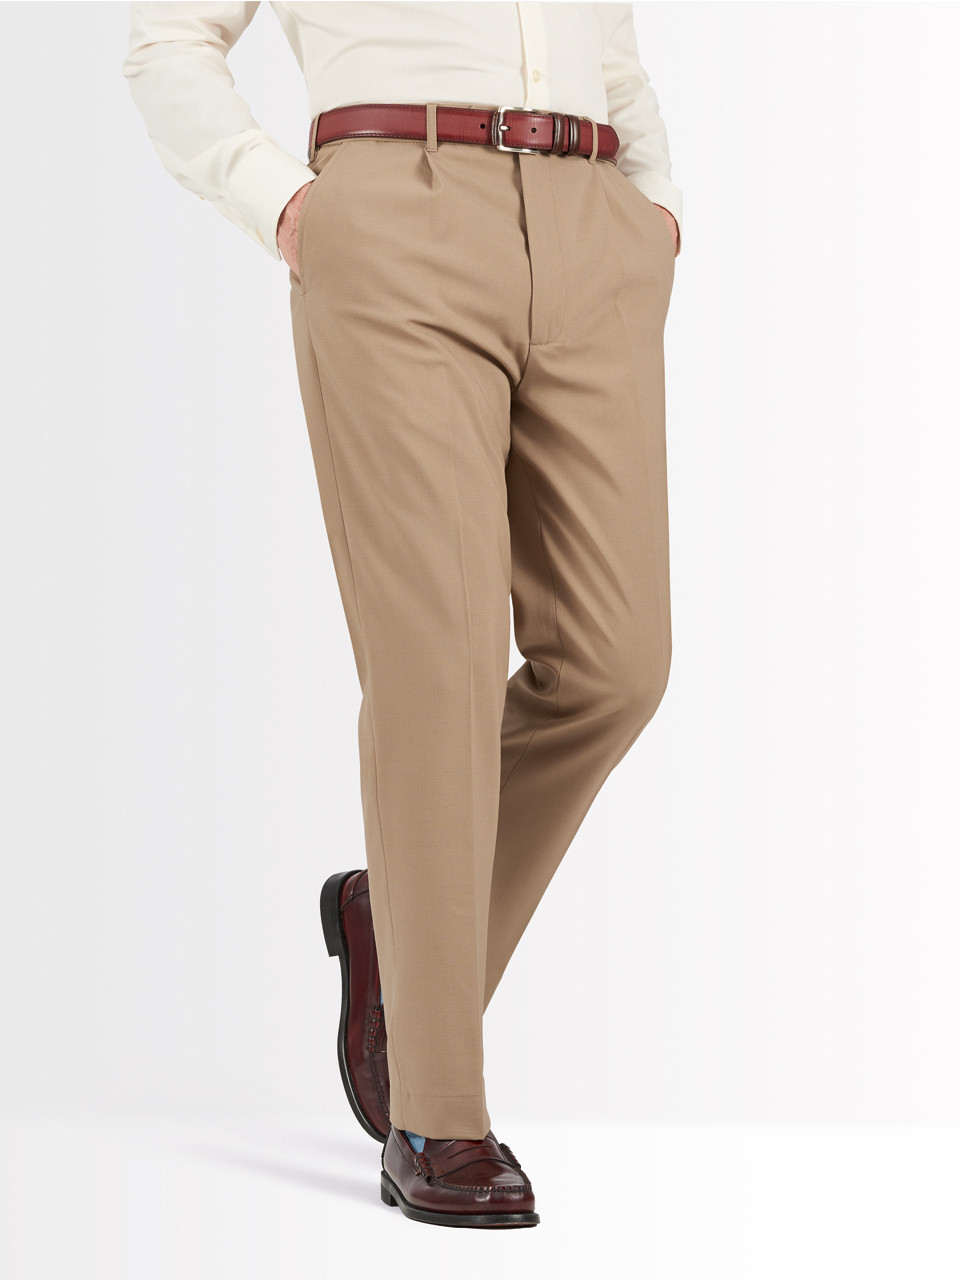 Concitor Men's Dress Pants Trousers Flat Front Slacks Chocolate Brown Color  28 at Amazon Men's Clothing store